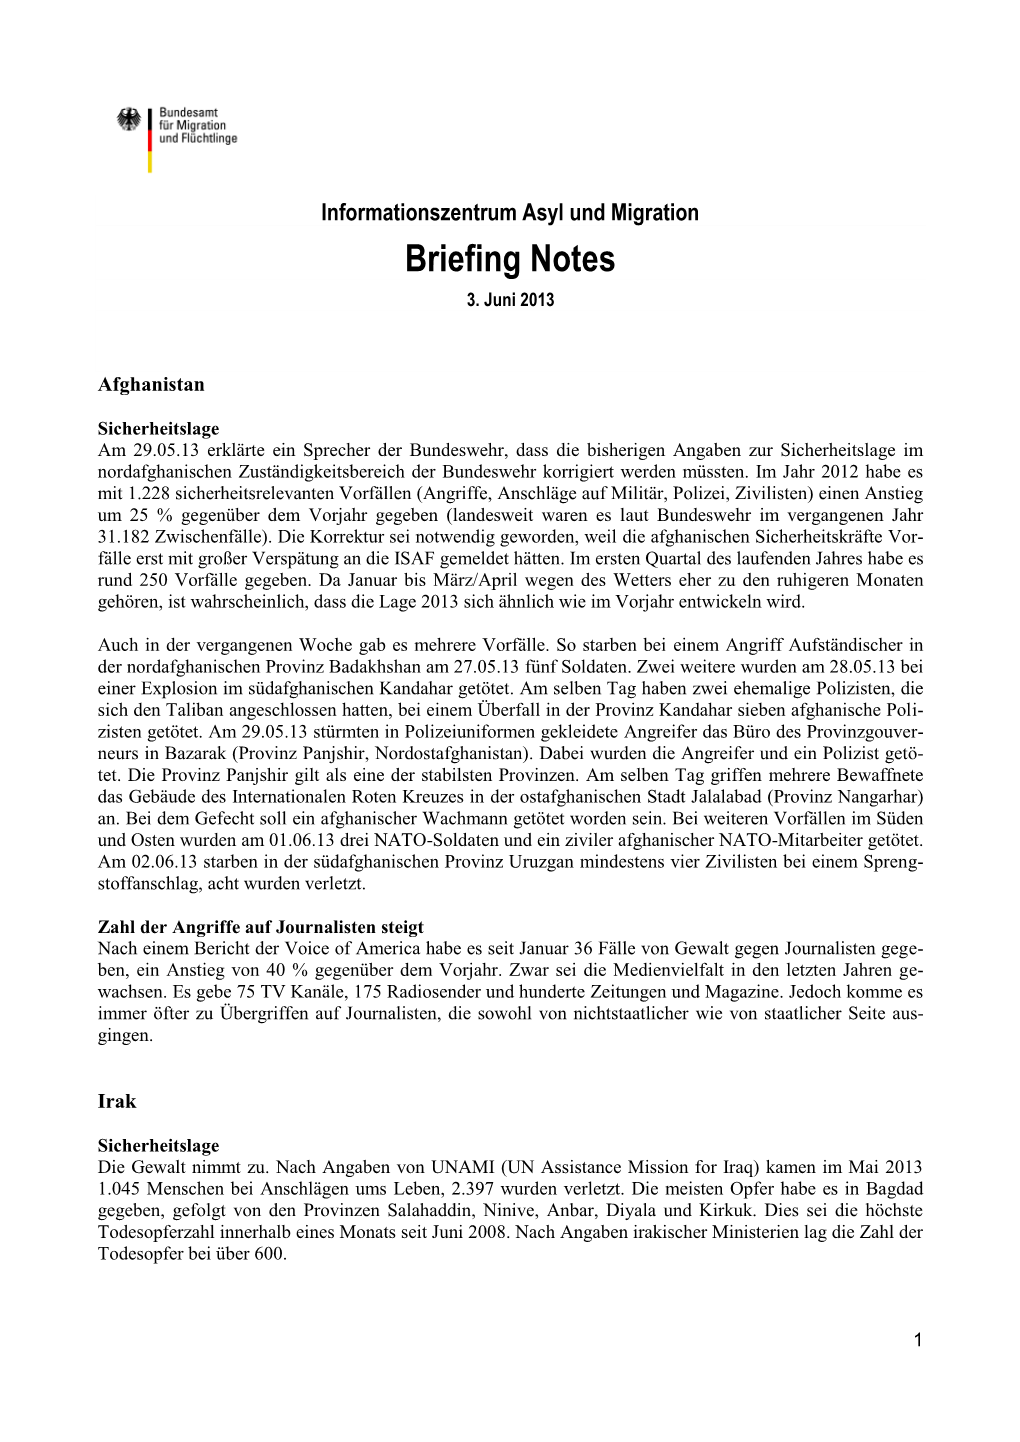 Briefing Notes 3